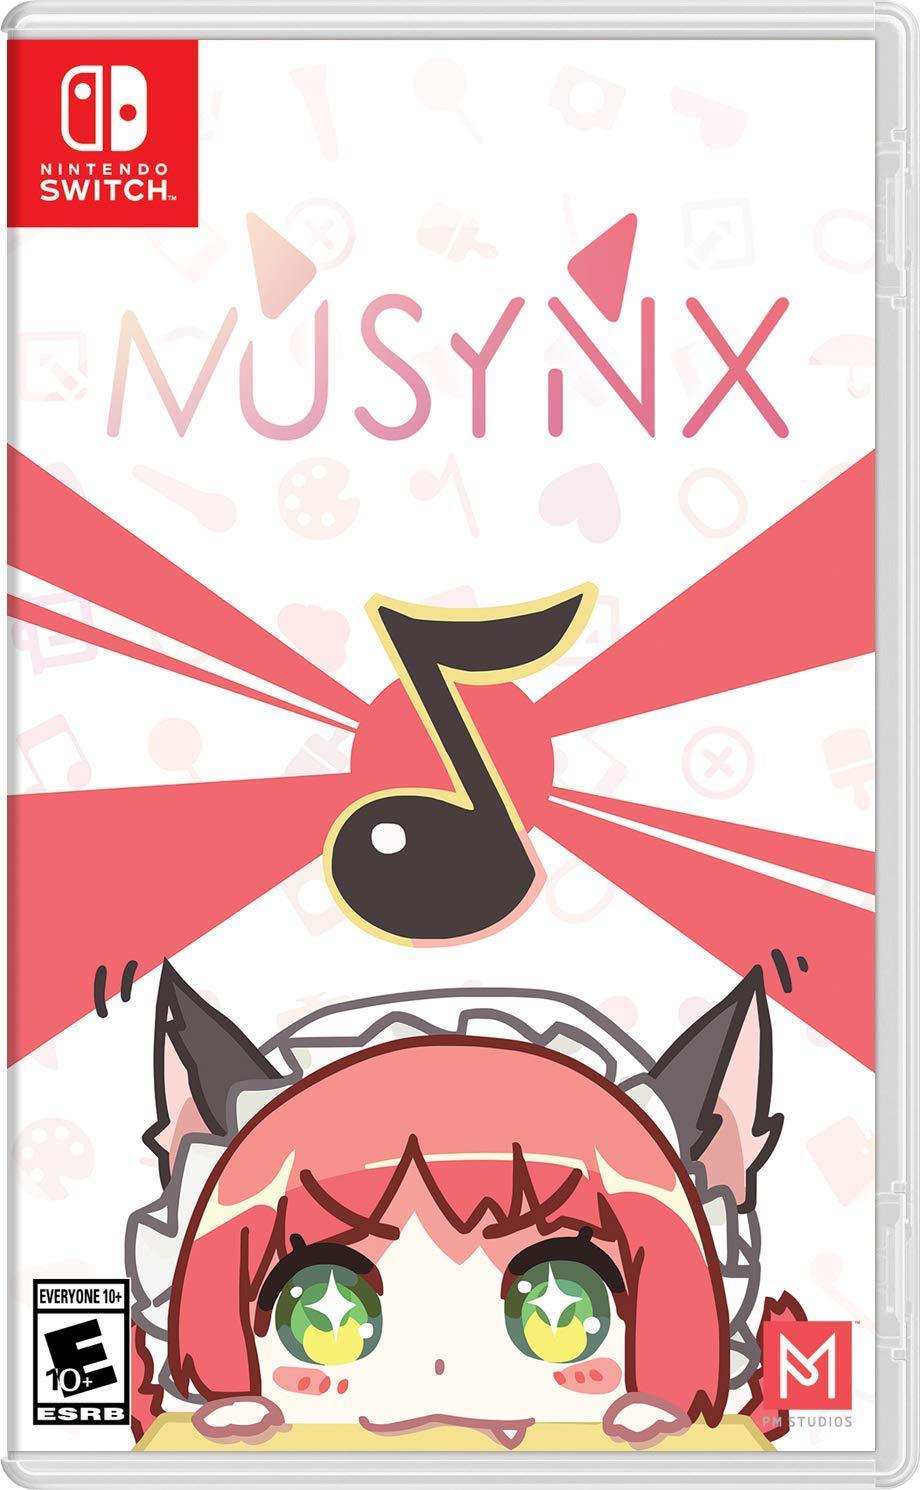 Musynx